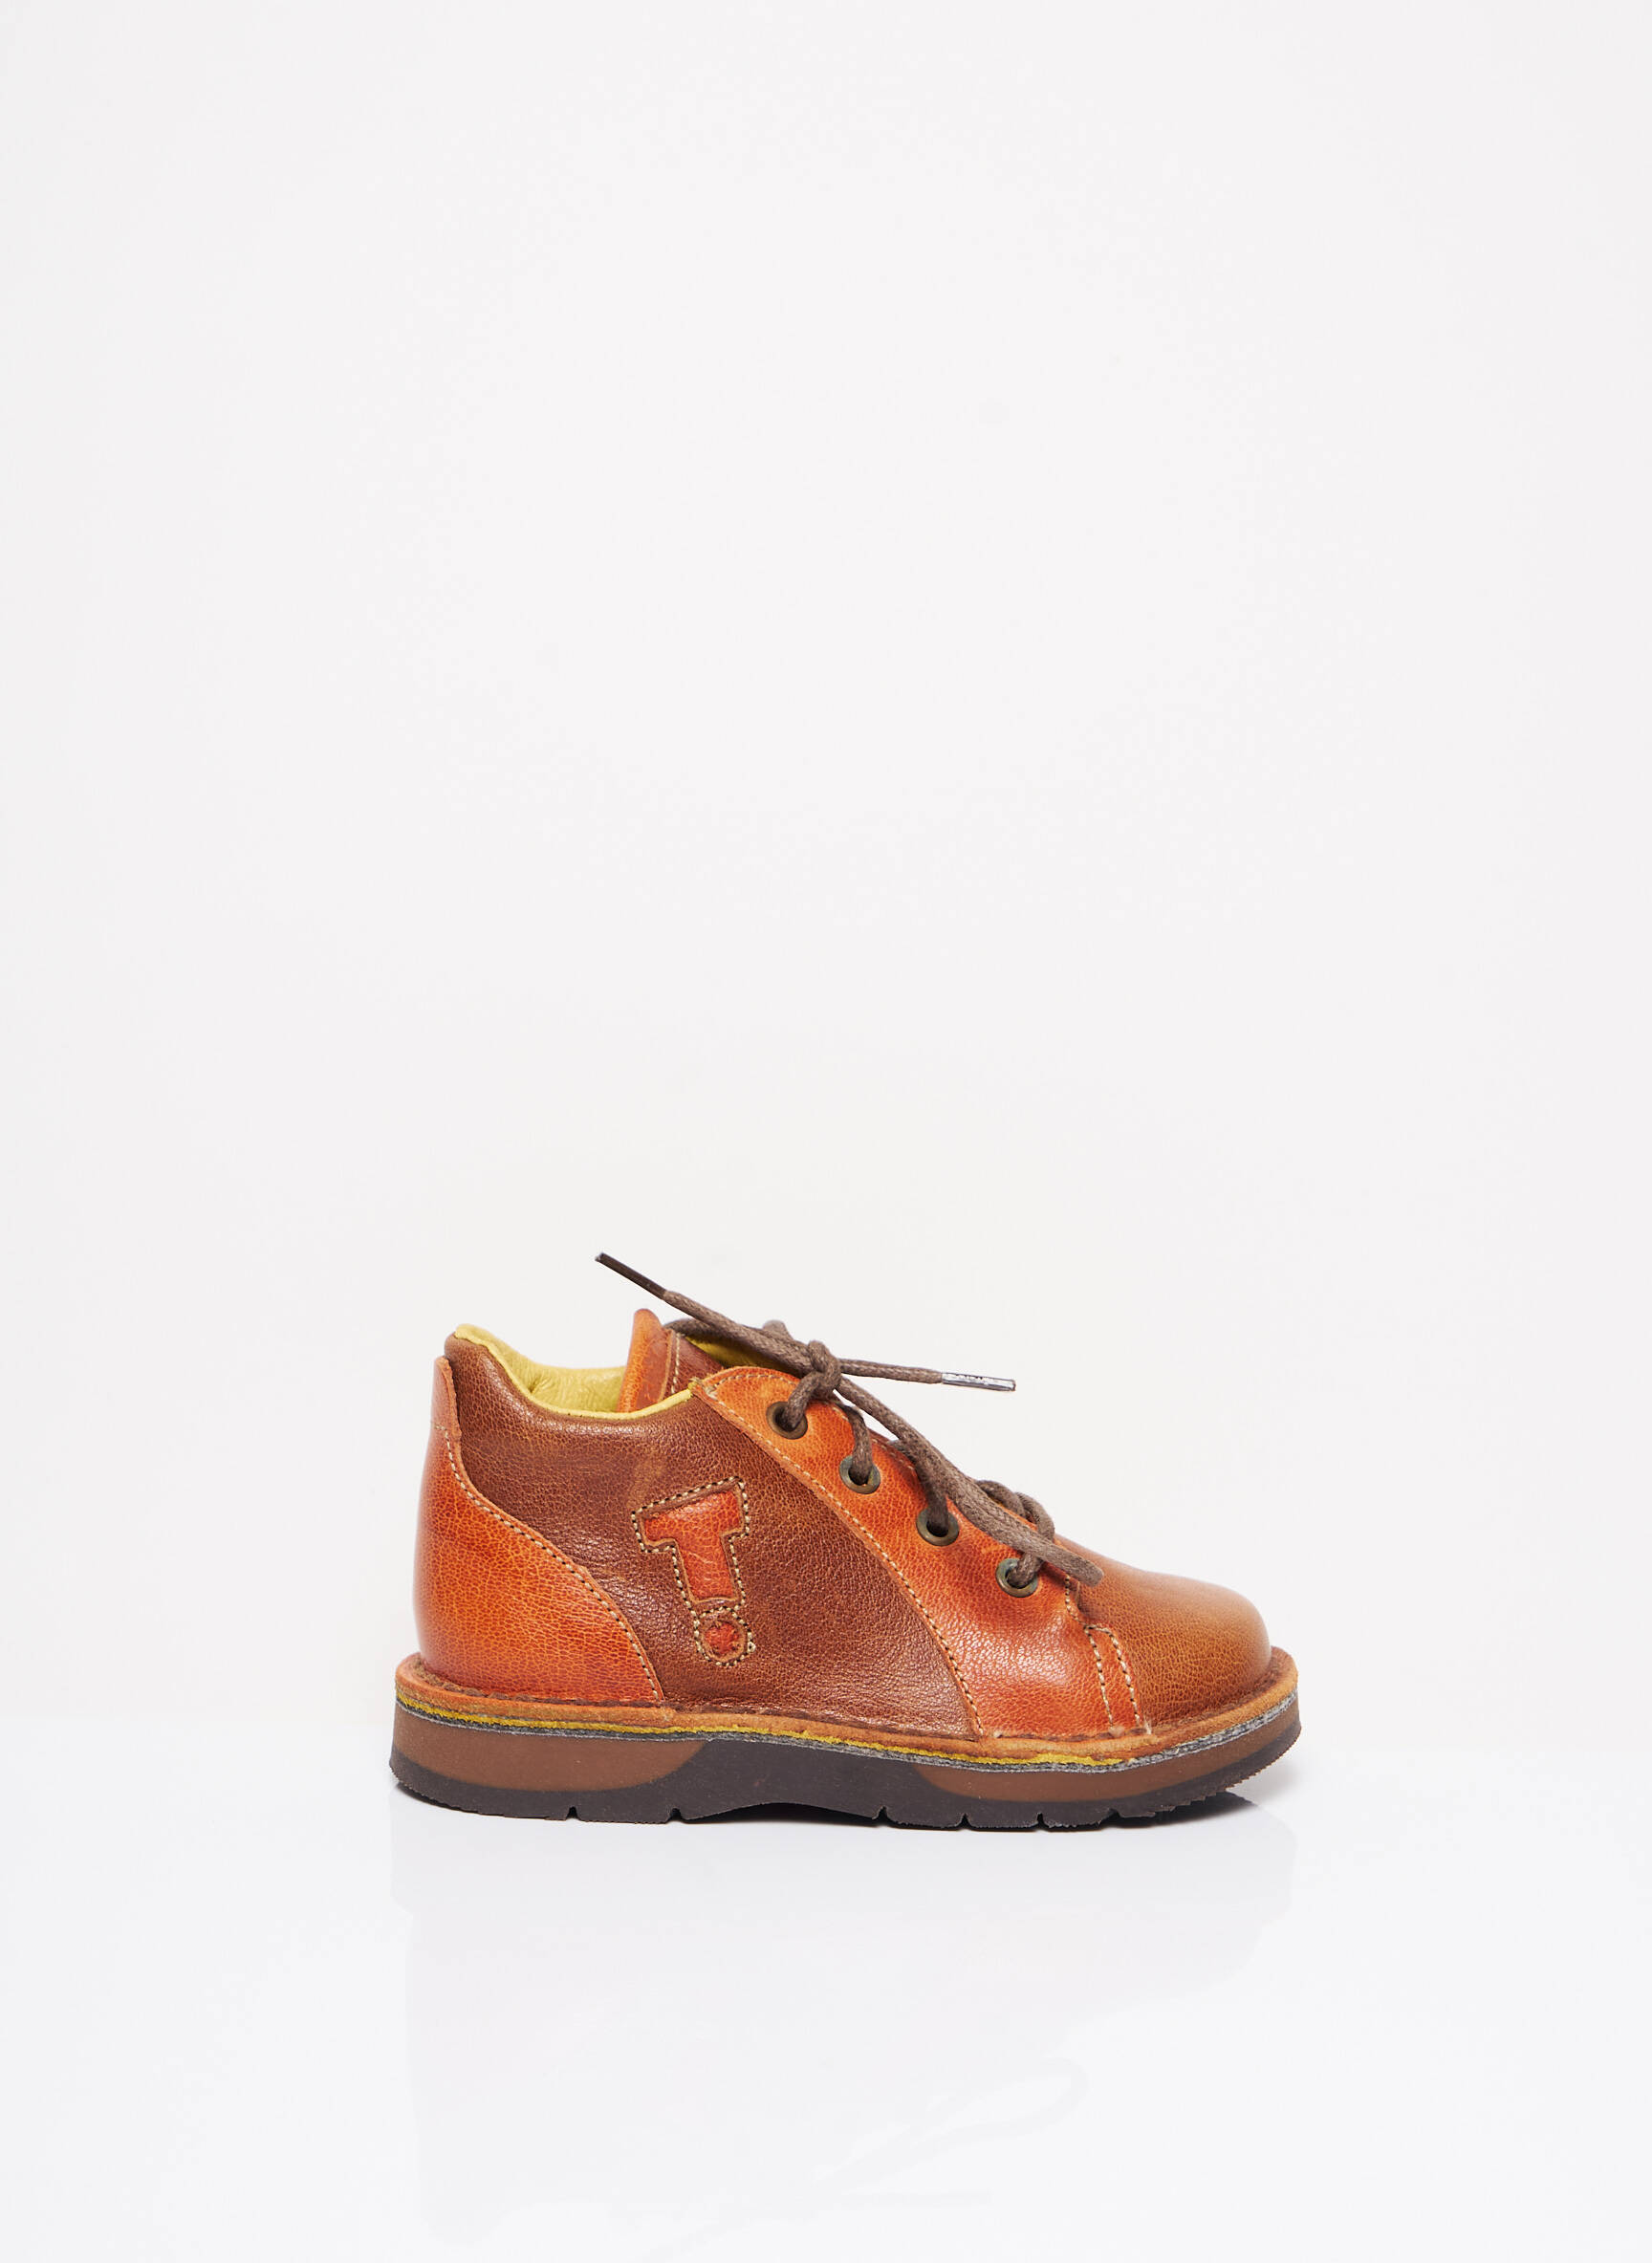 Chaussures brunes - Tekilou - Chaussures et chaussons